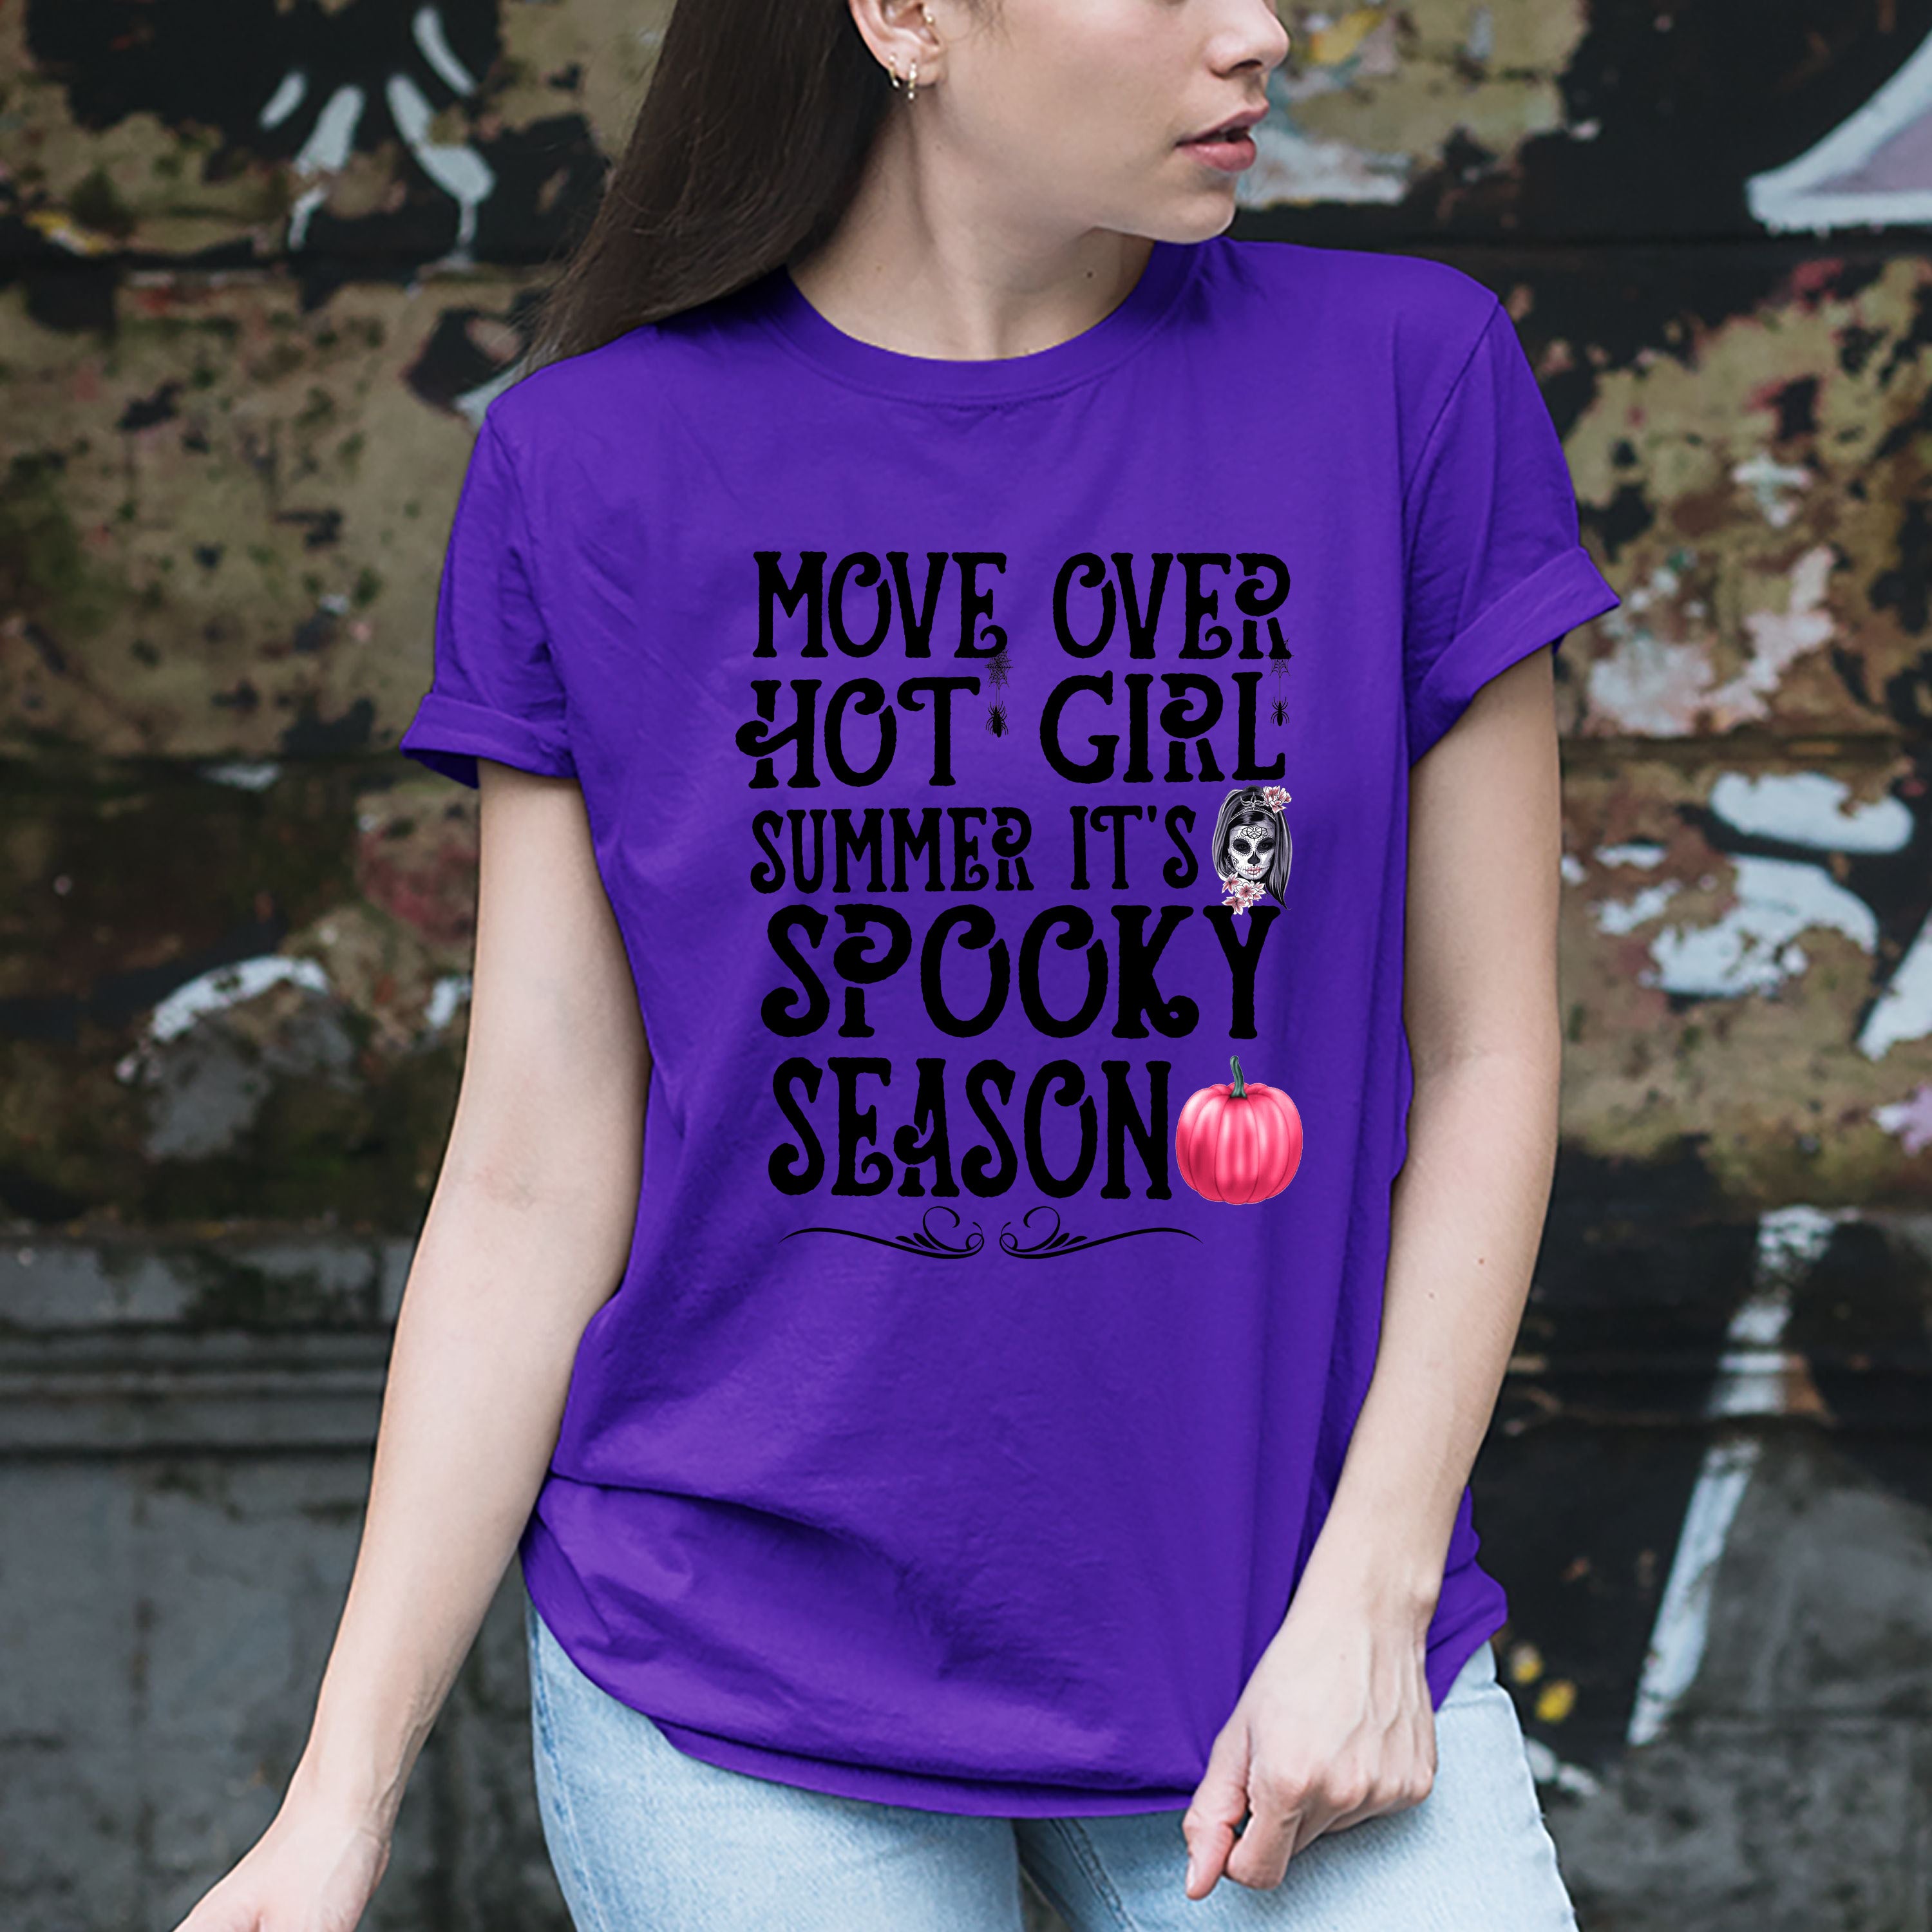 'Spooky Season''